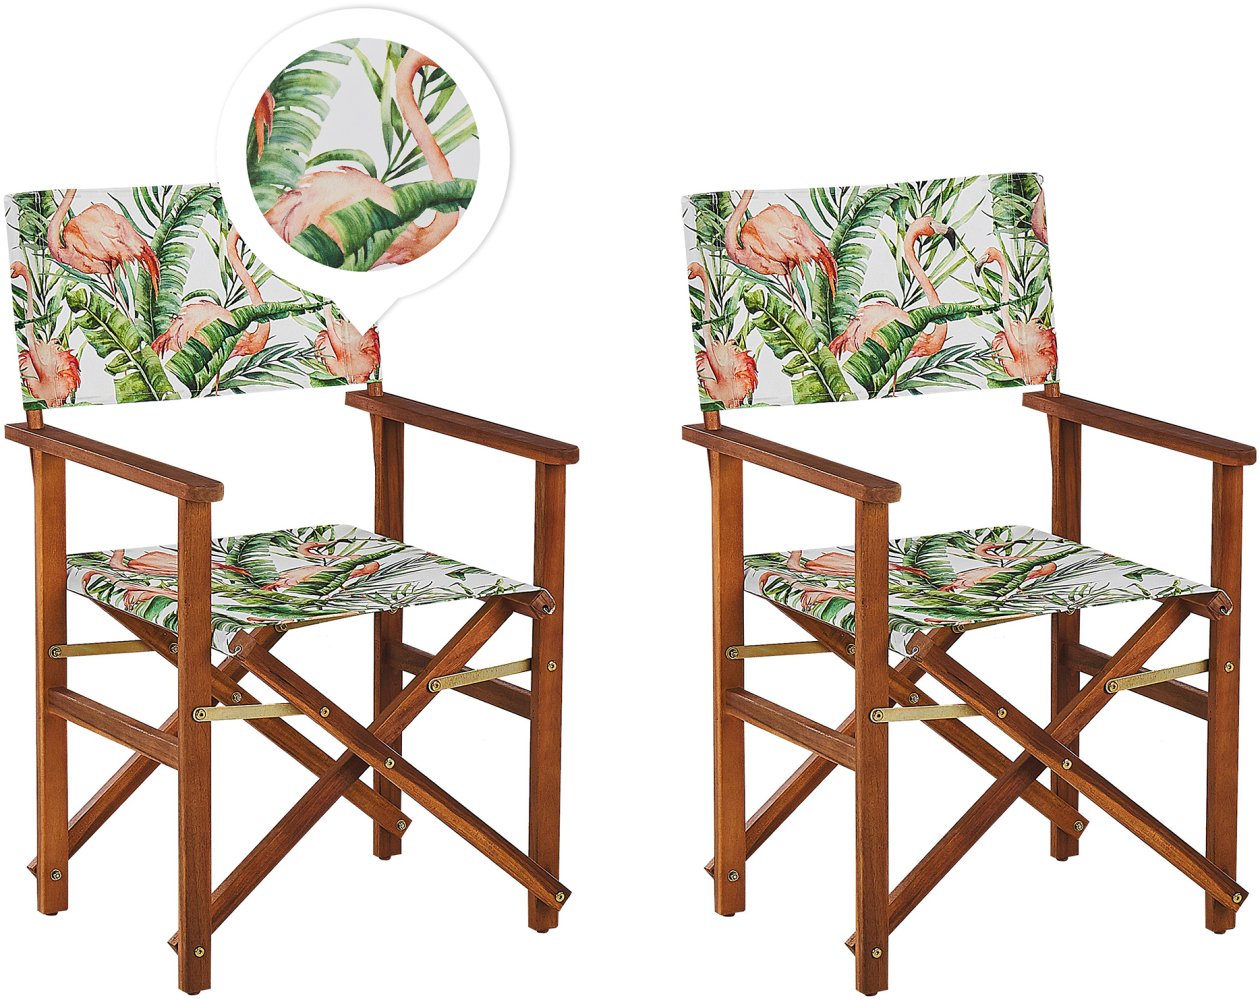 Gartenstuhl Akazienholz dunkelbraun Textil cremeweiß bunt Flamingomuster 2er Set CINE Bild 1